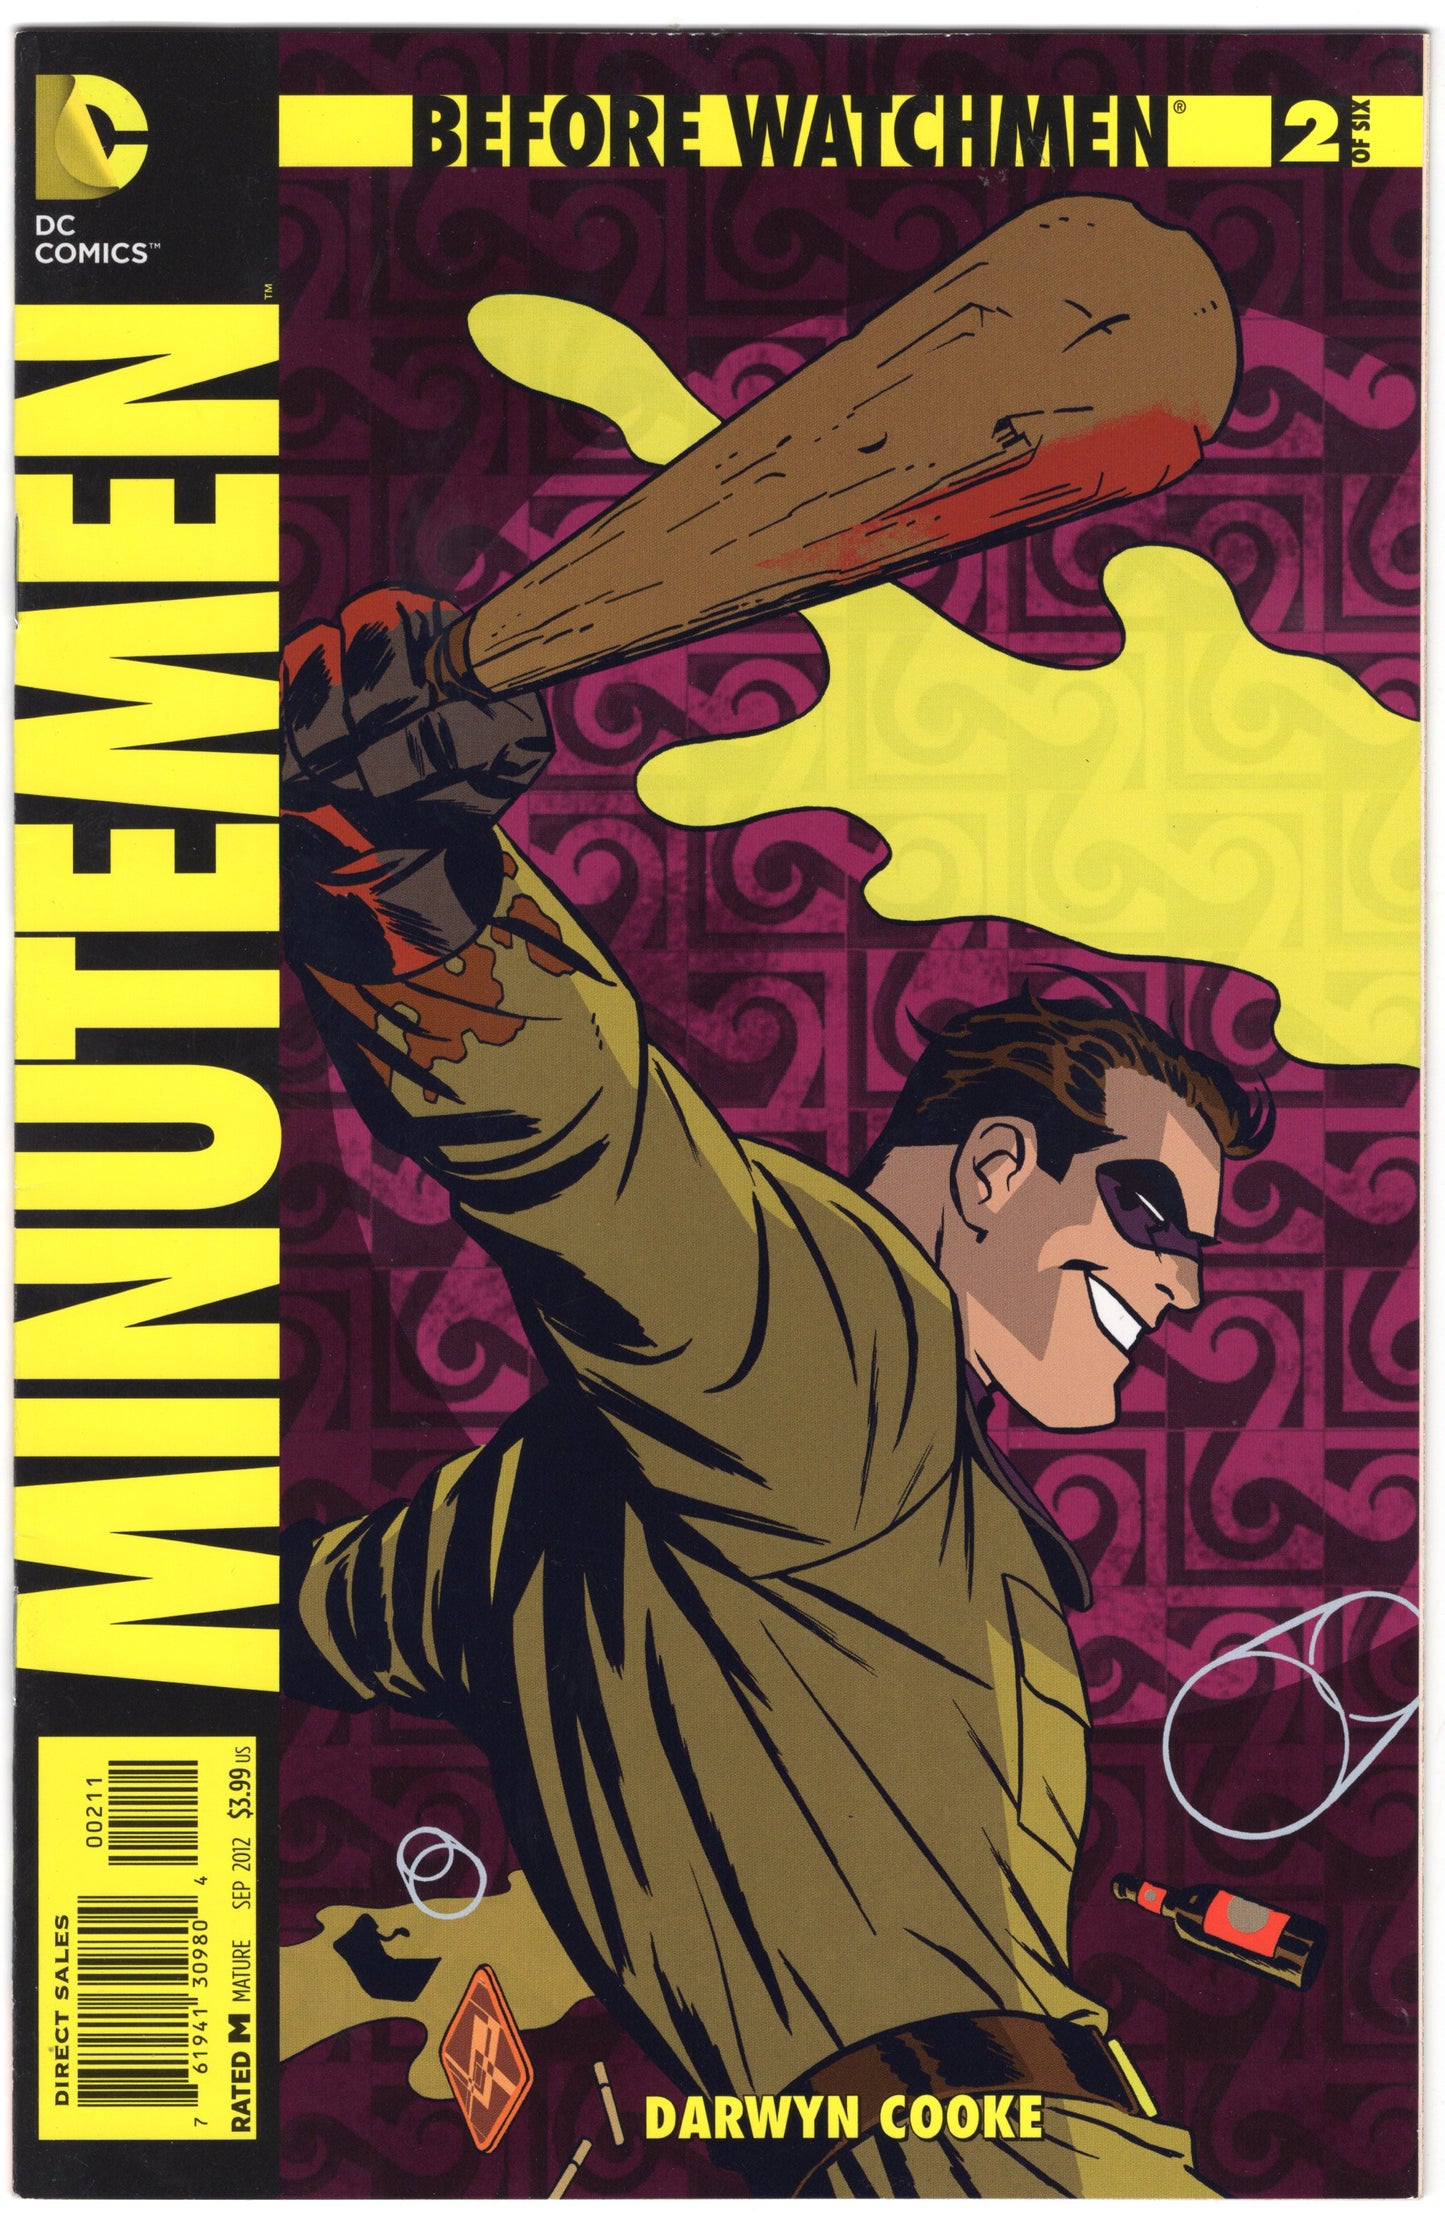 Before Watchmen Minutemen - Issue #2 (April, 2002 - DC Comics) NM-